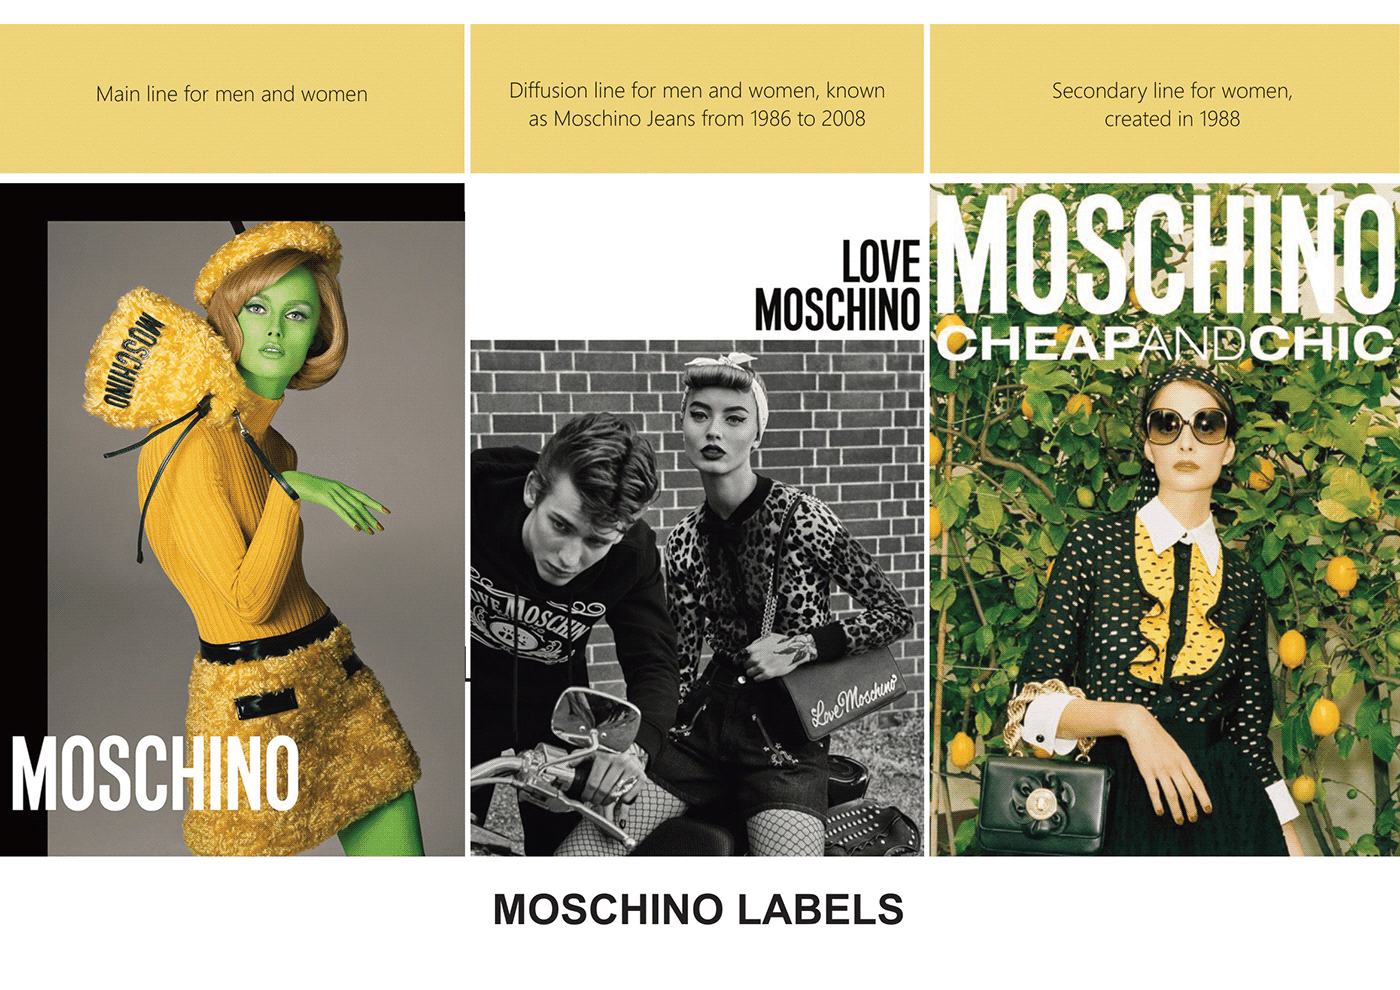 moschino brand identity